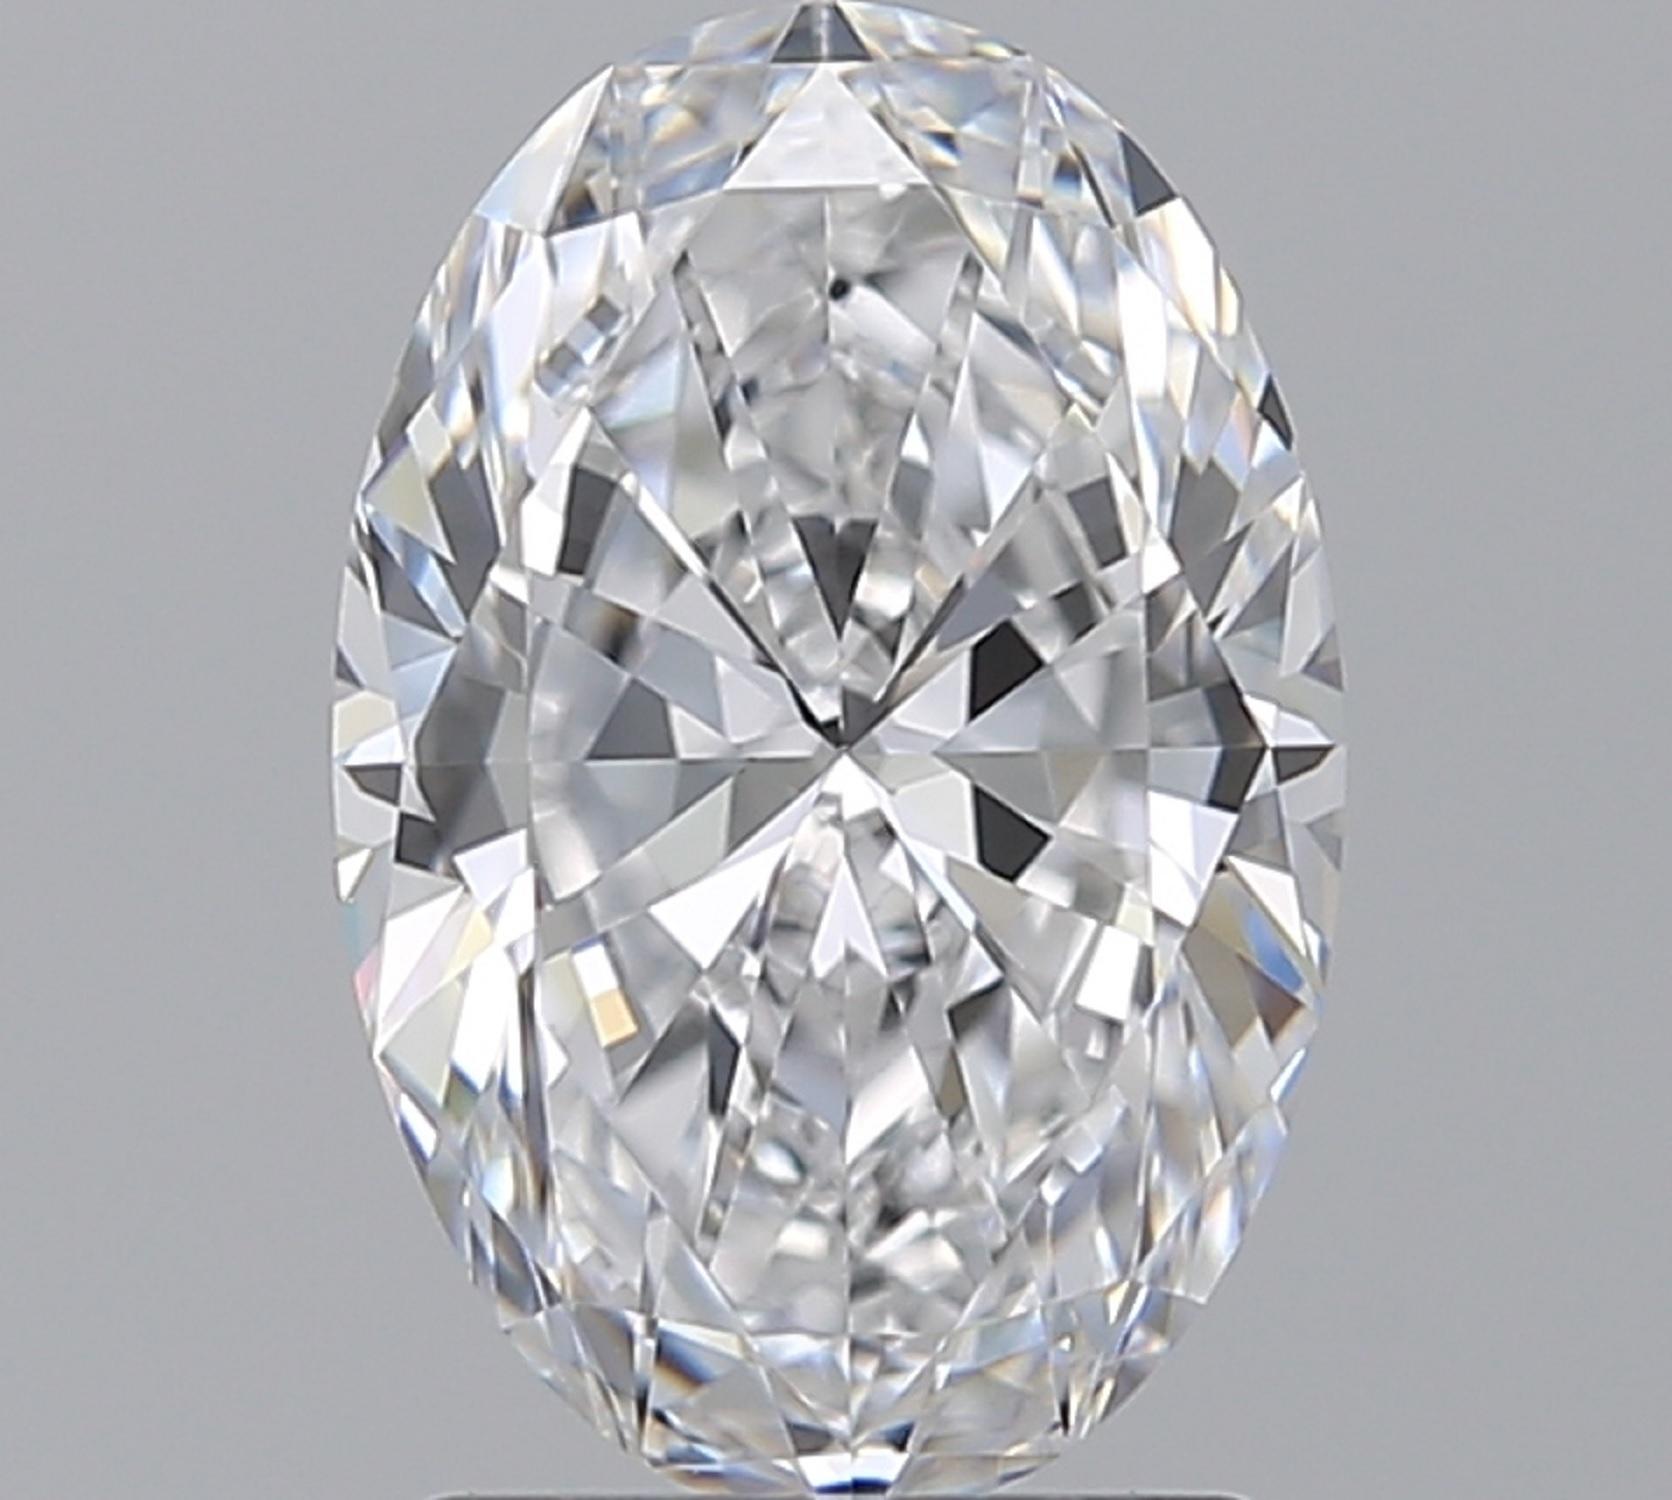 An exquisite 5.75 carat oval diamond ring
Carat: 5.75
Clarity:  VS2
Color: D



